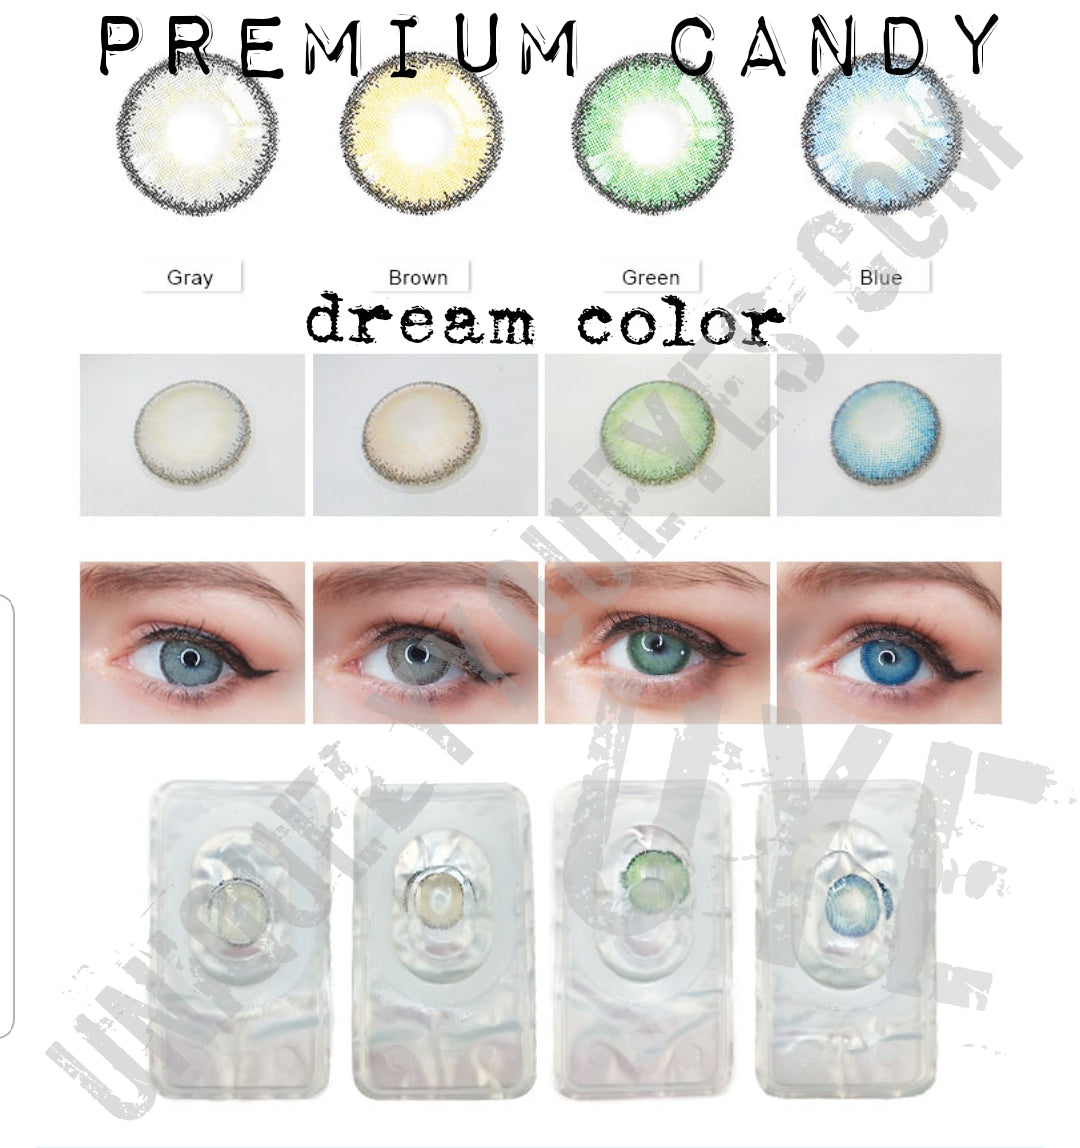 ☆PRE-ORDER☆ NATURAL PREMIUM CANDY DREAM COLOR Gray-Premium Candy Dream Color-UNIQUELY-YOU-EYES